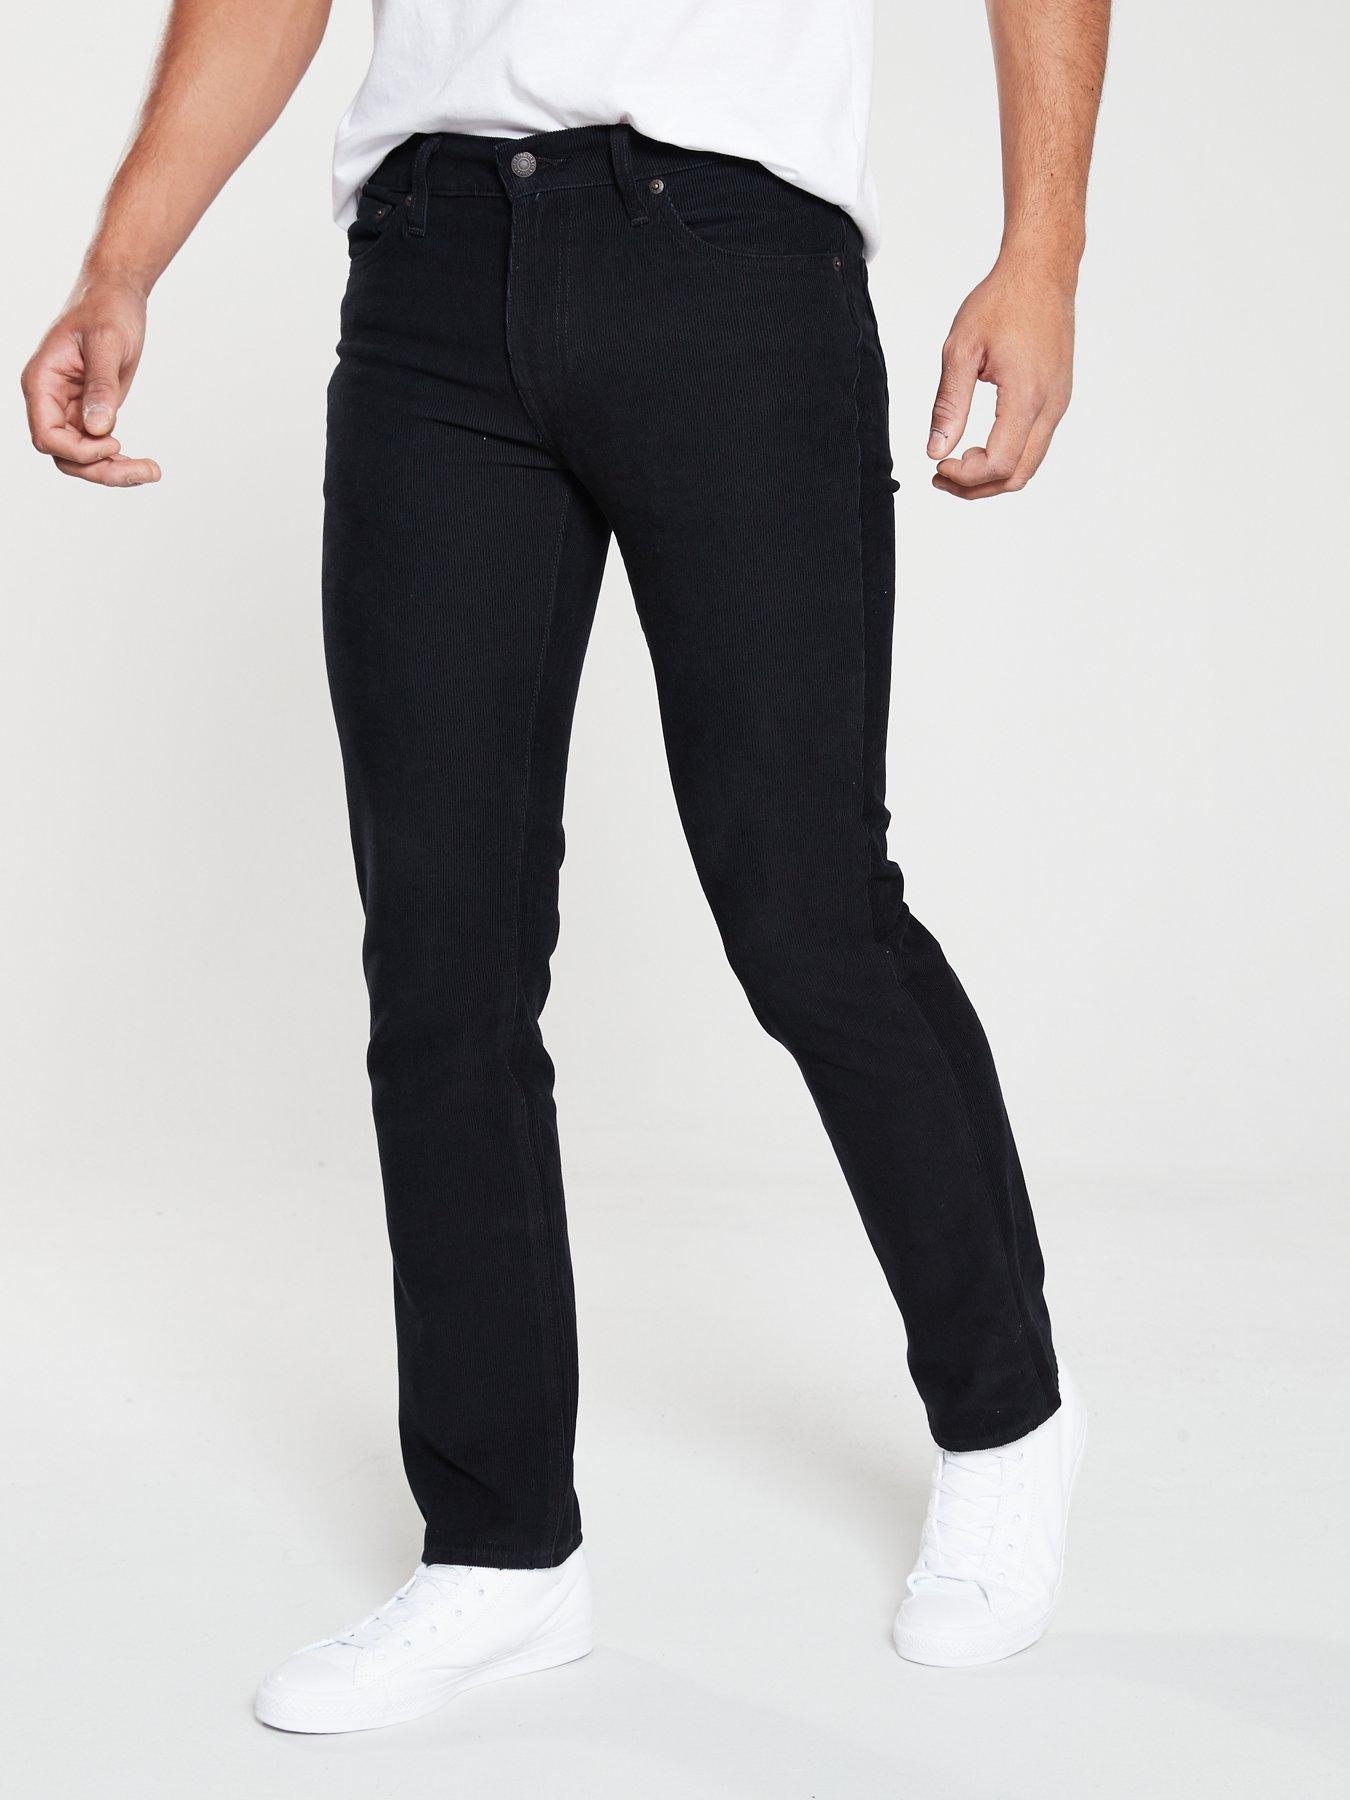 levi black corduroy jeans